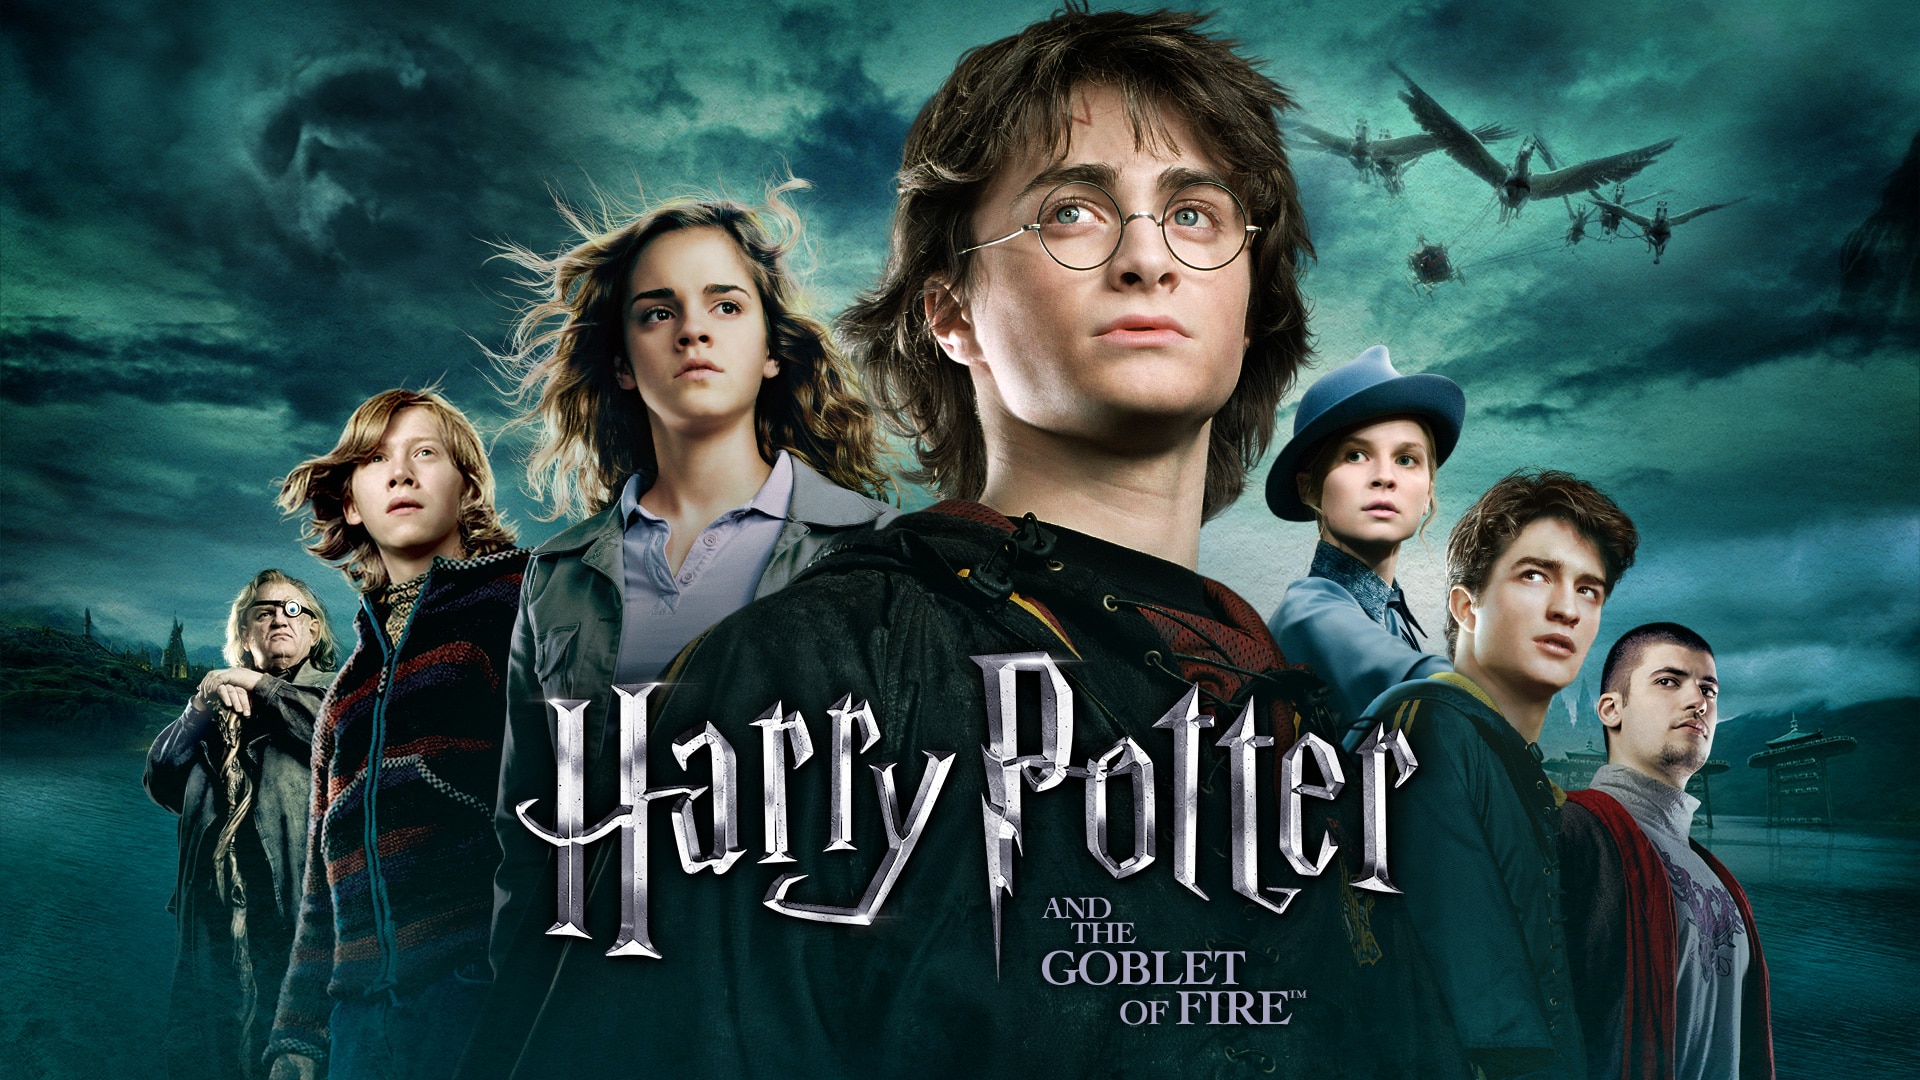 Harry Potter & Fantastic Beasts Video Games — Harry Potter Database